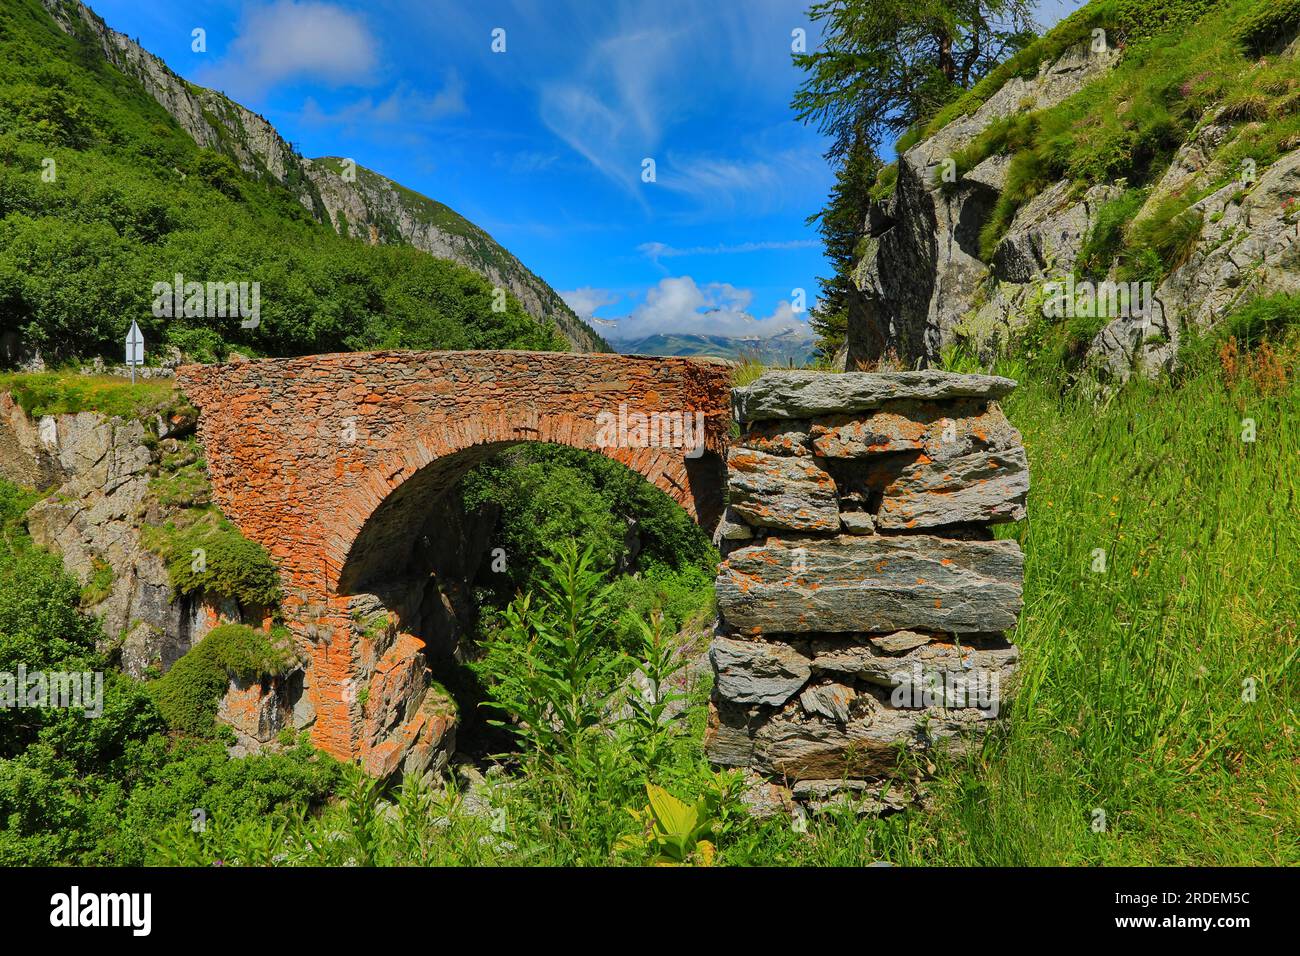 Old stone bridge over the Aegene, Ladstaffel, Nufenenpass, Griesspass, Ulrichen, Canton Valais Switzerland, HDR image Stock Photo